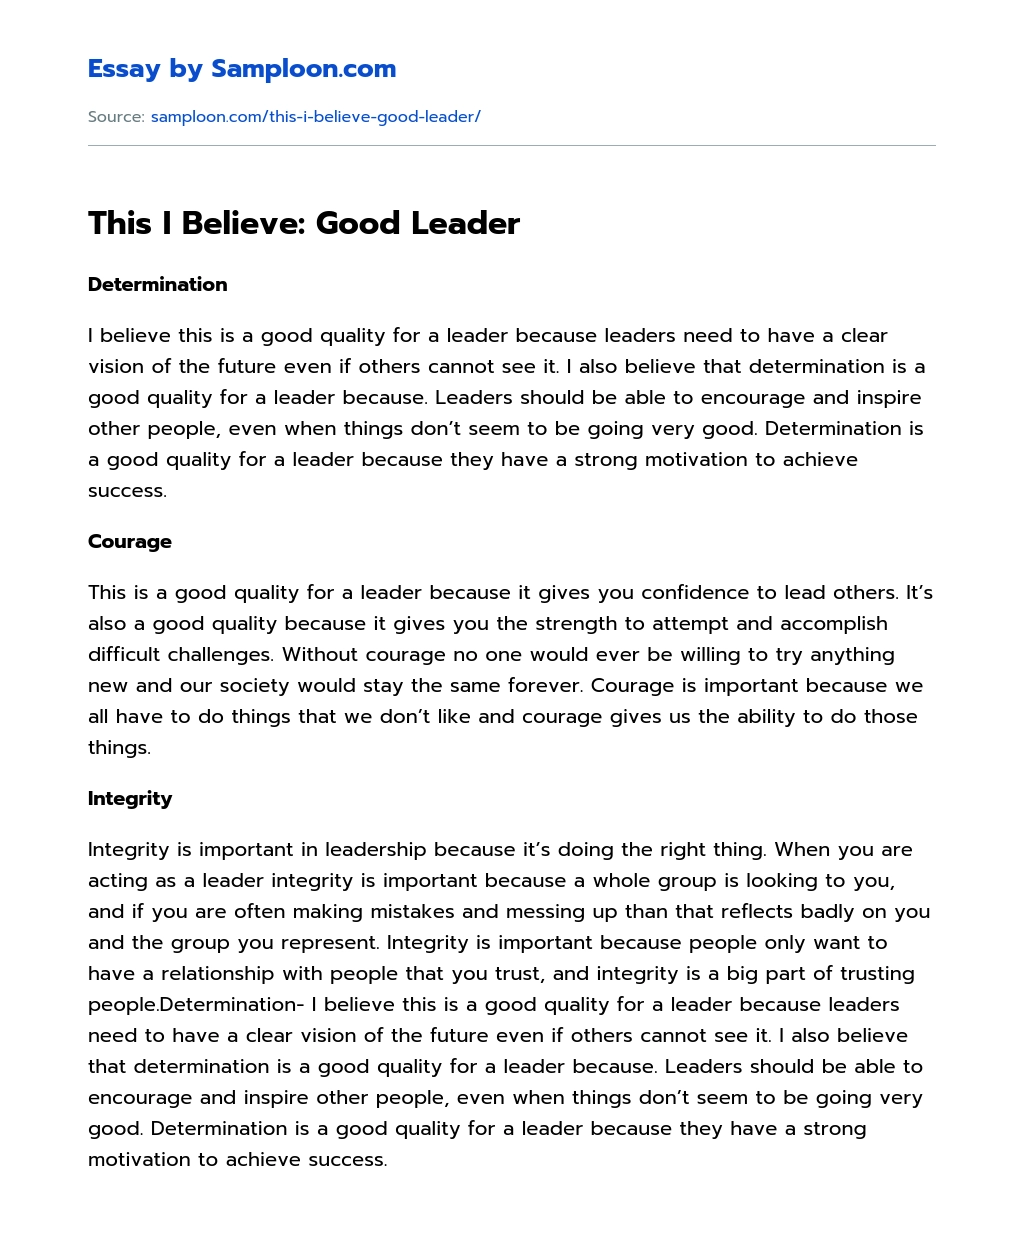 This I Believe: Good Leader essay